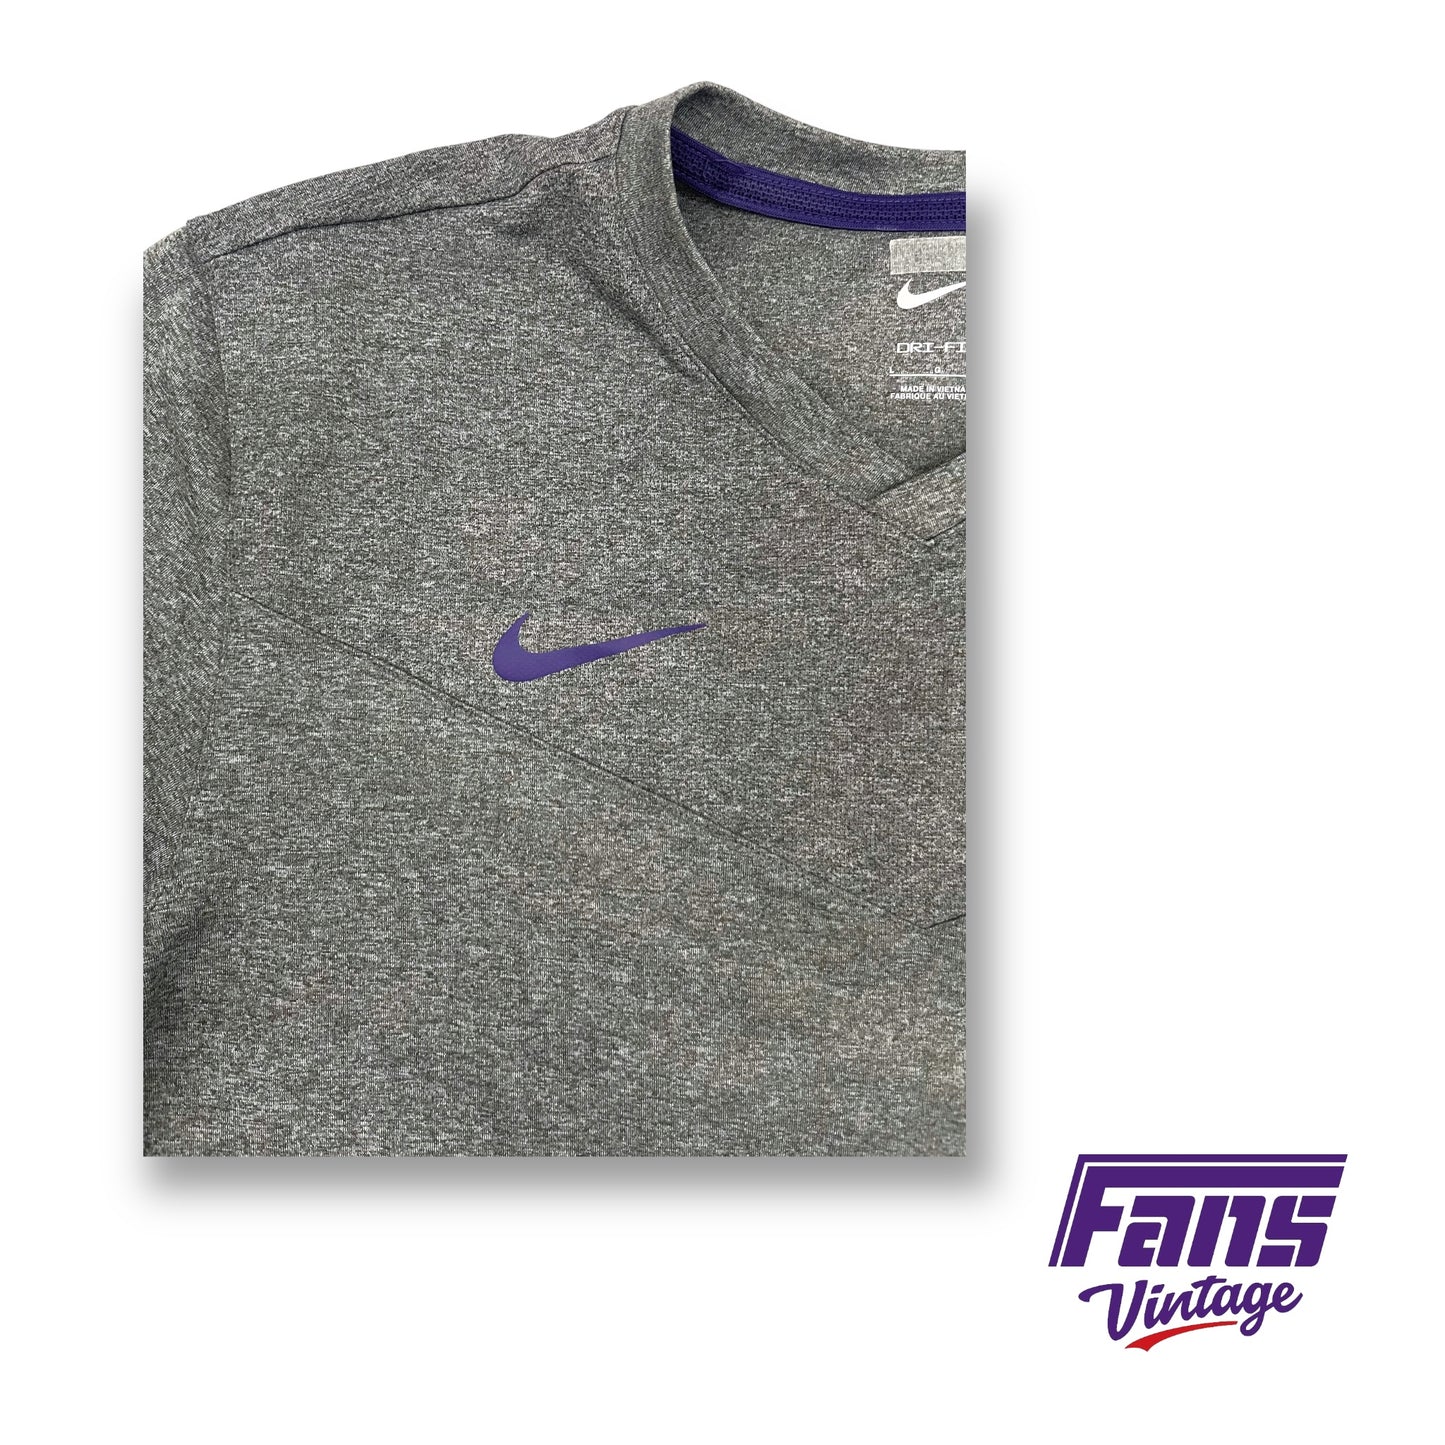 TCU Team Issued Nike Premium long sleeve v-neck workout shirt